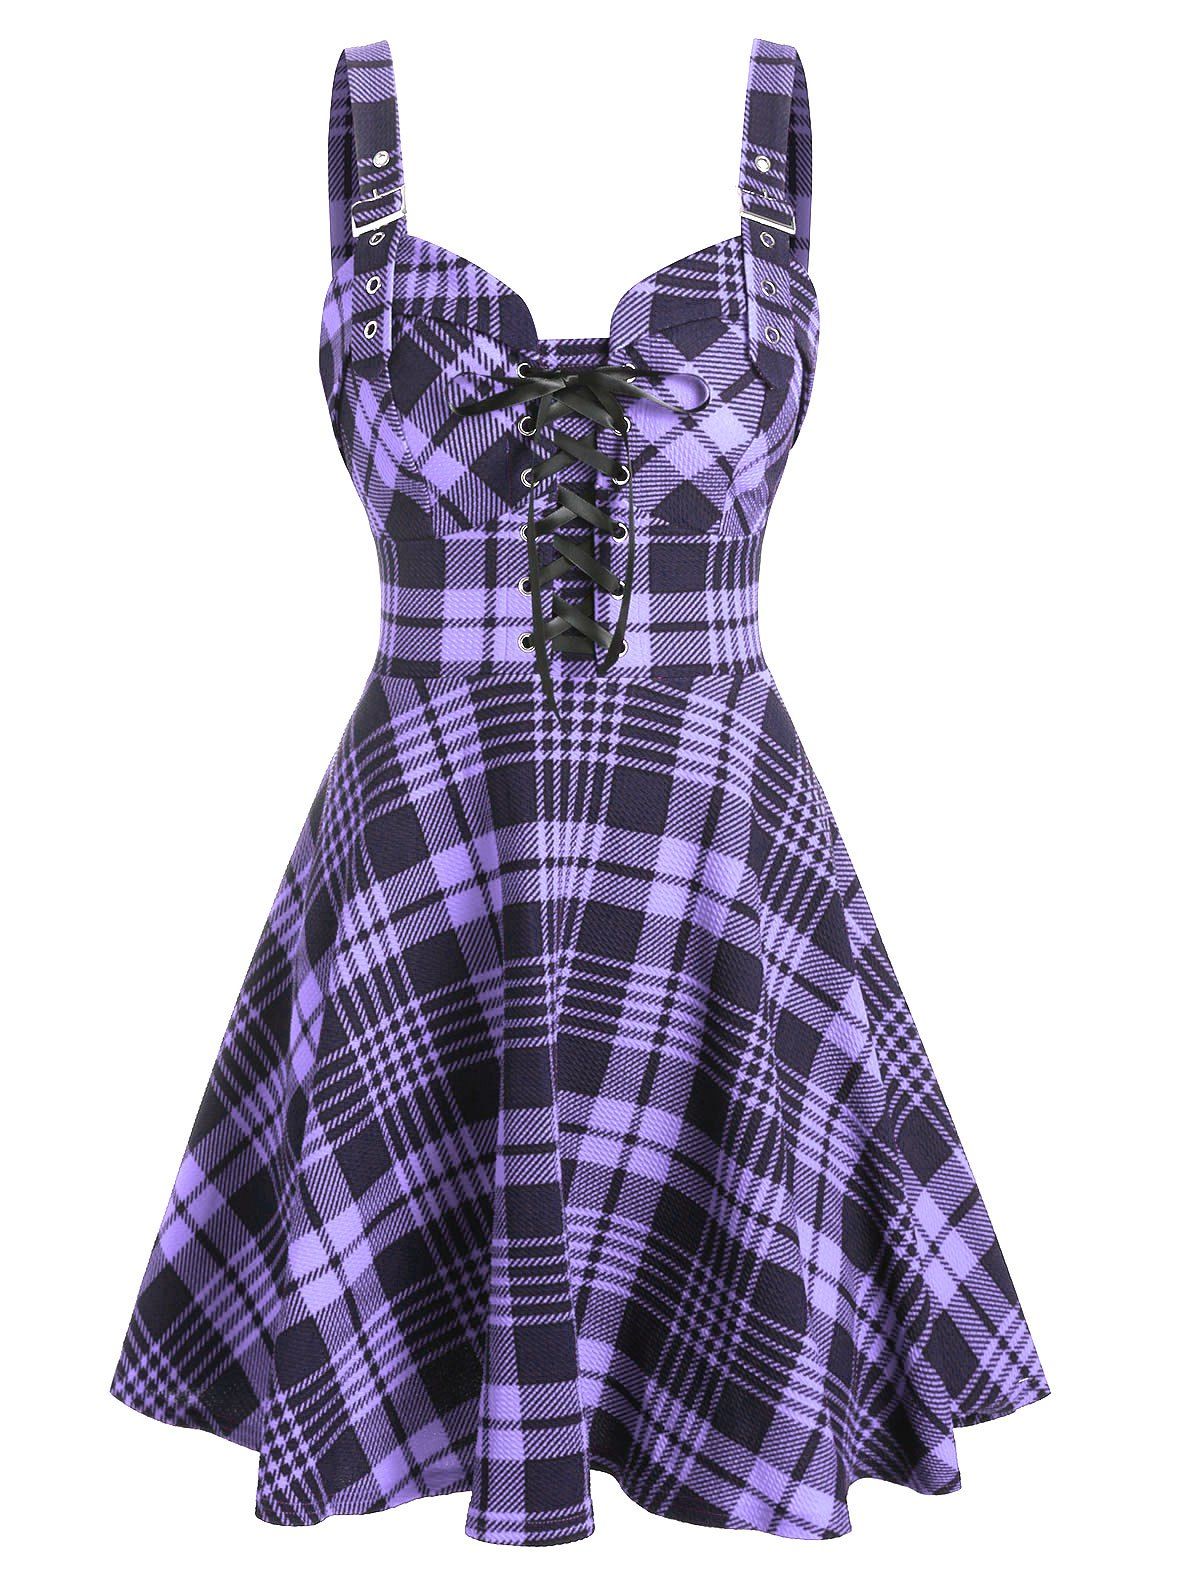 Plaid Print Lace-up Buckle Strap Sleeveless Dress - PURPLE L